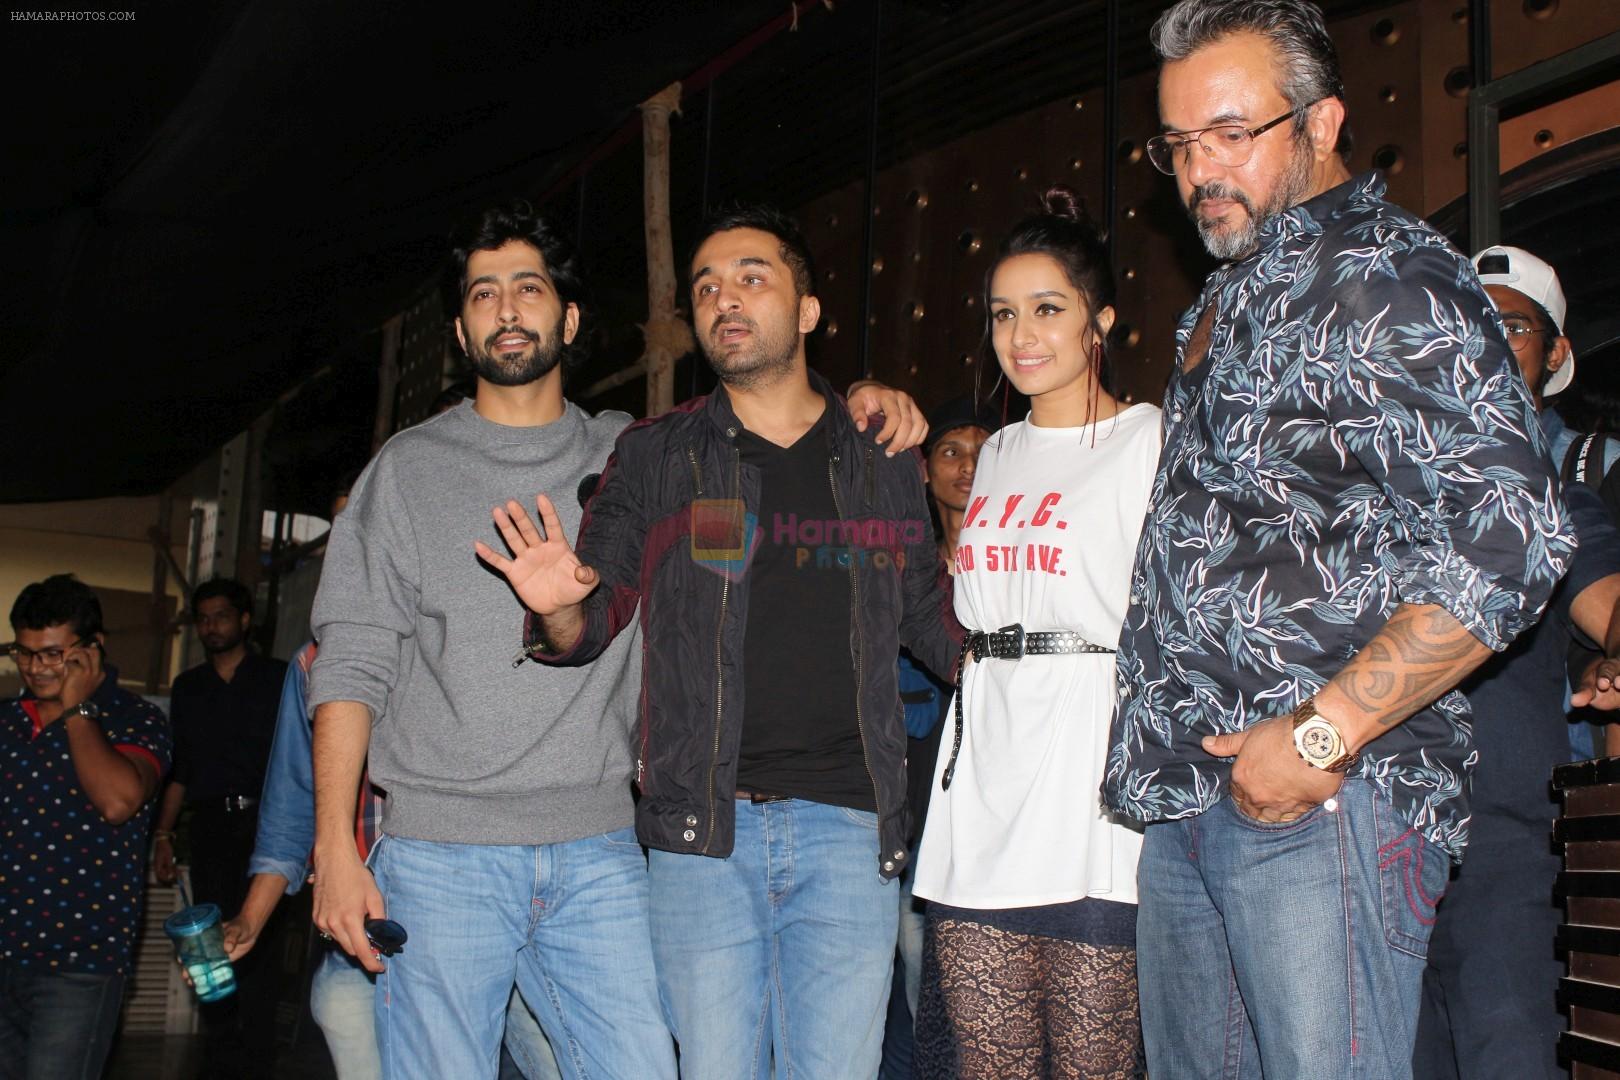 Ankur Bhatia, Shraddha Kapoor, Siddhanth Kapoor, Apoorva Lakhia at the promotion of film Haseena Parkar on 9th Sept 2017